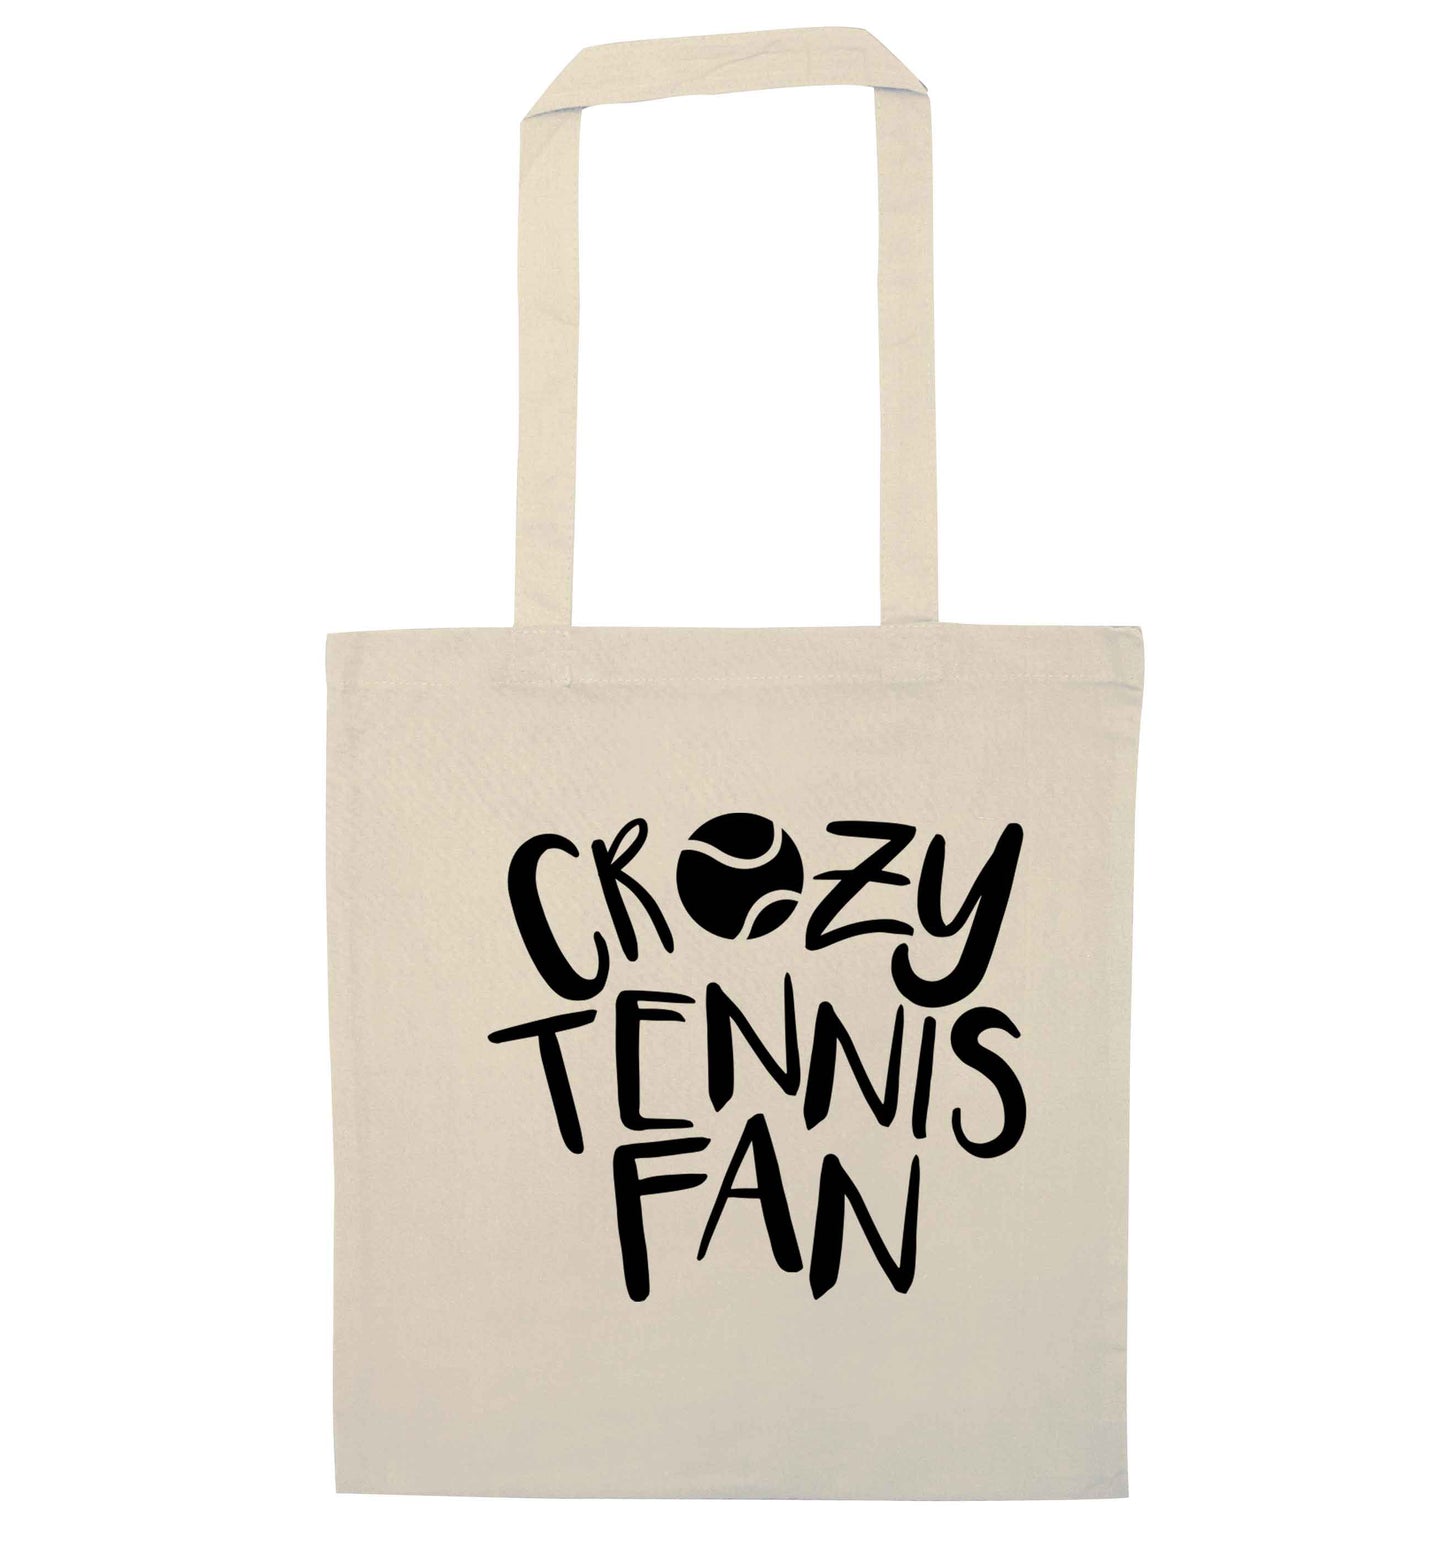 Crazy tennis fan natural tote bag